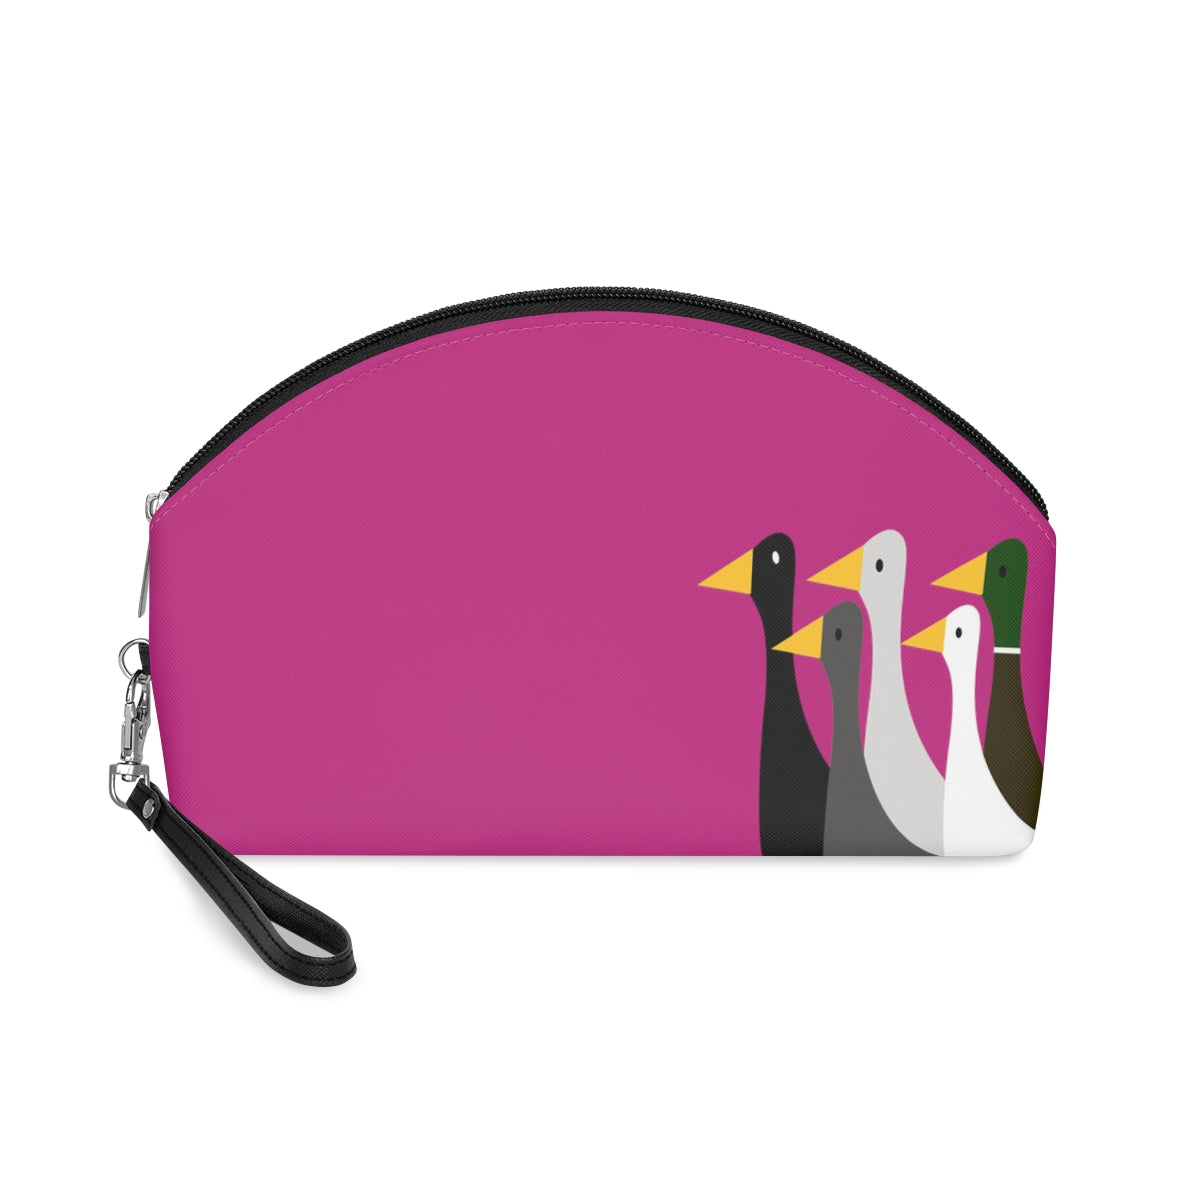 Nifty Ducks Co. Logo2 - Medium Red Violet c42a86 - Makeup Bag